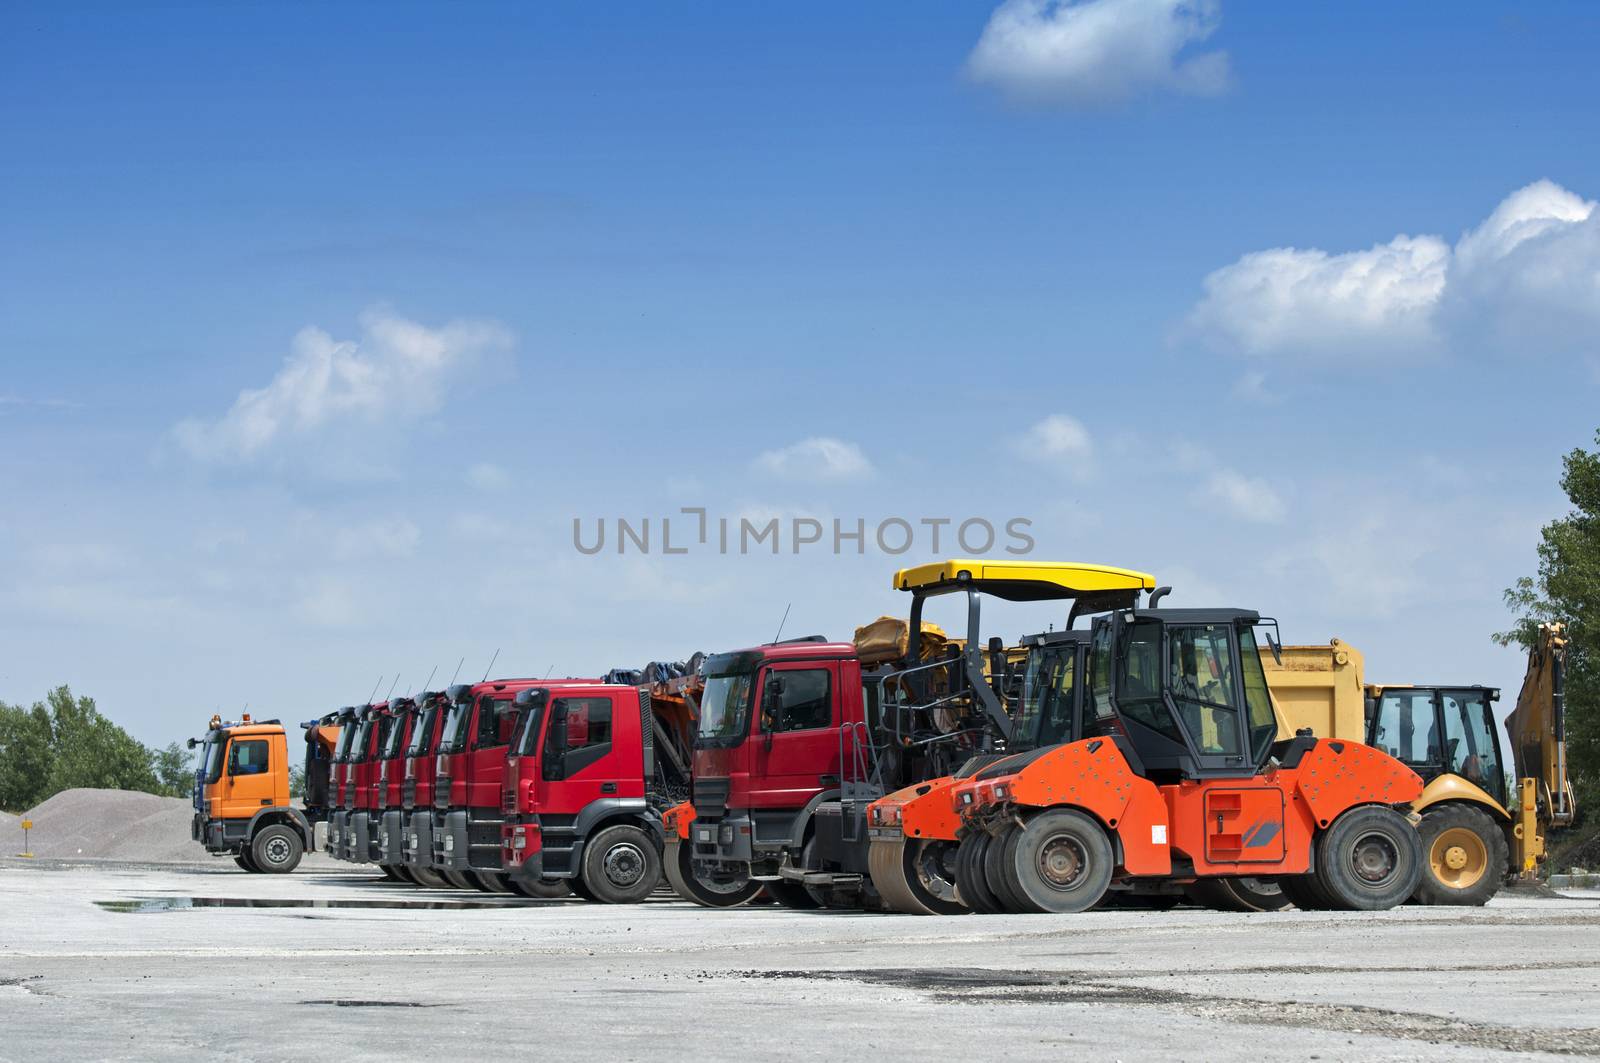 Trucks, rollers and machinery for asphalting by deyan_georgiev